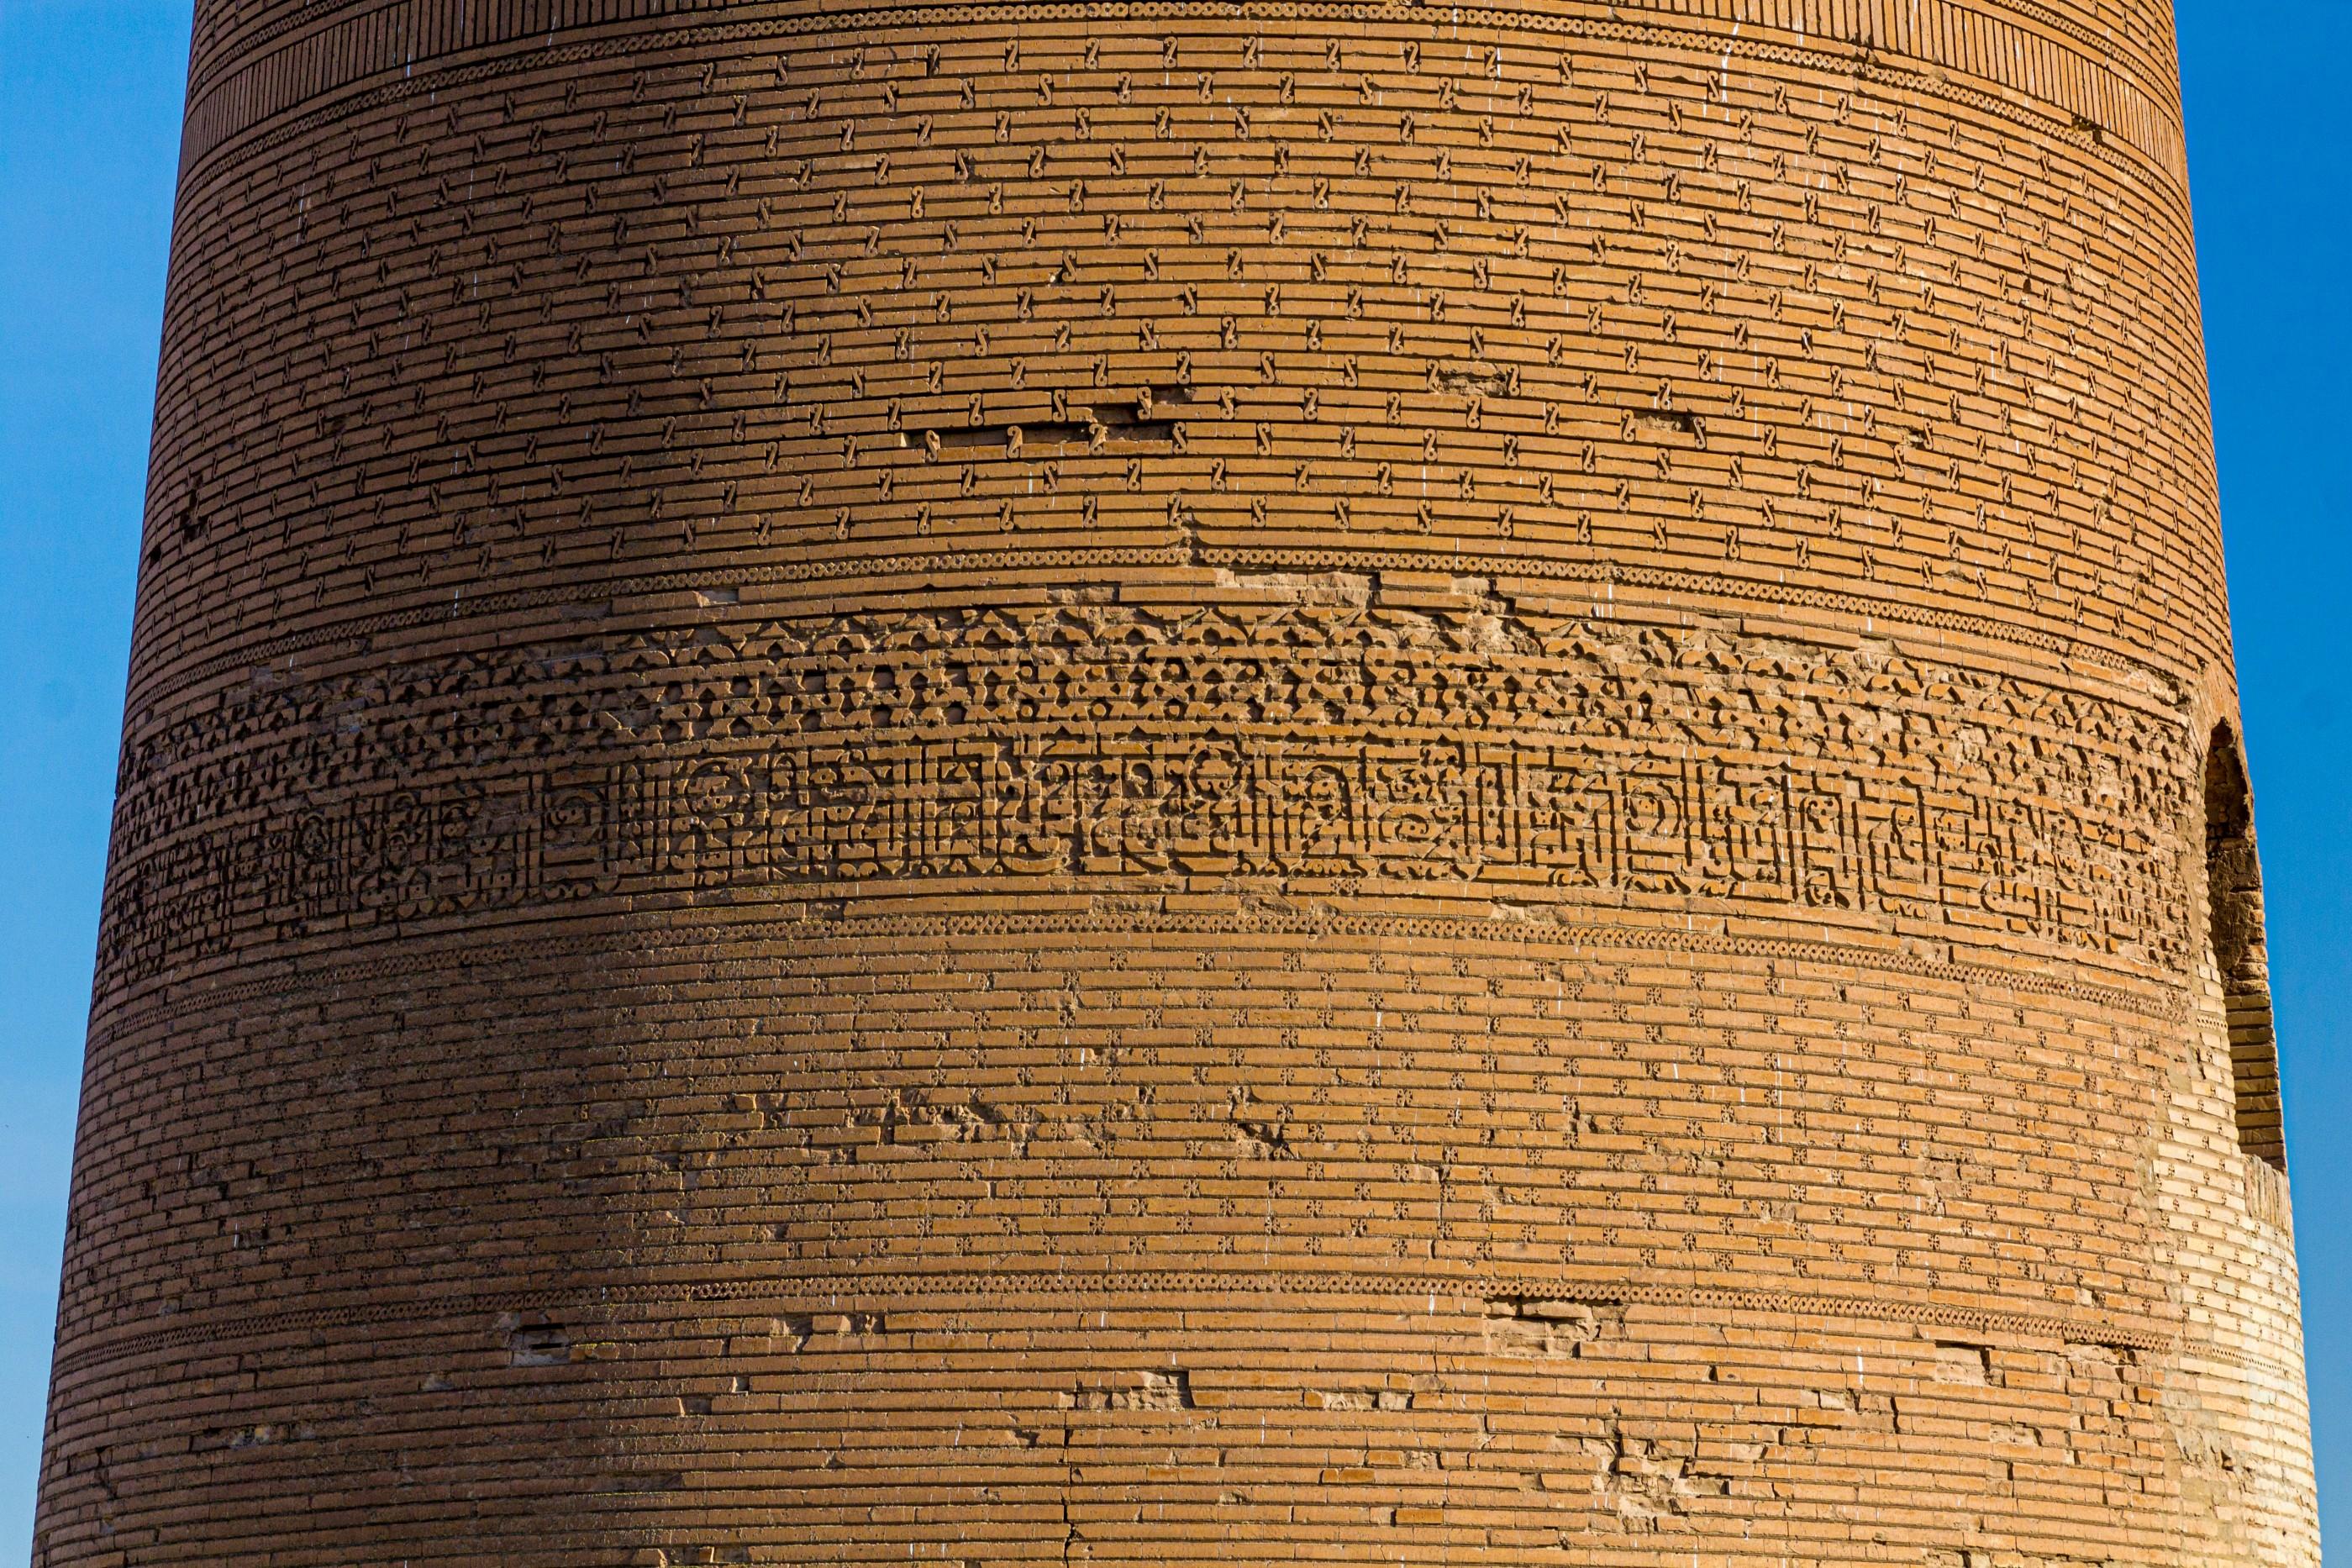 Brick inscription along the minaret